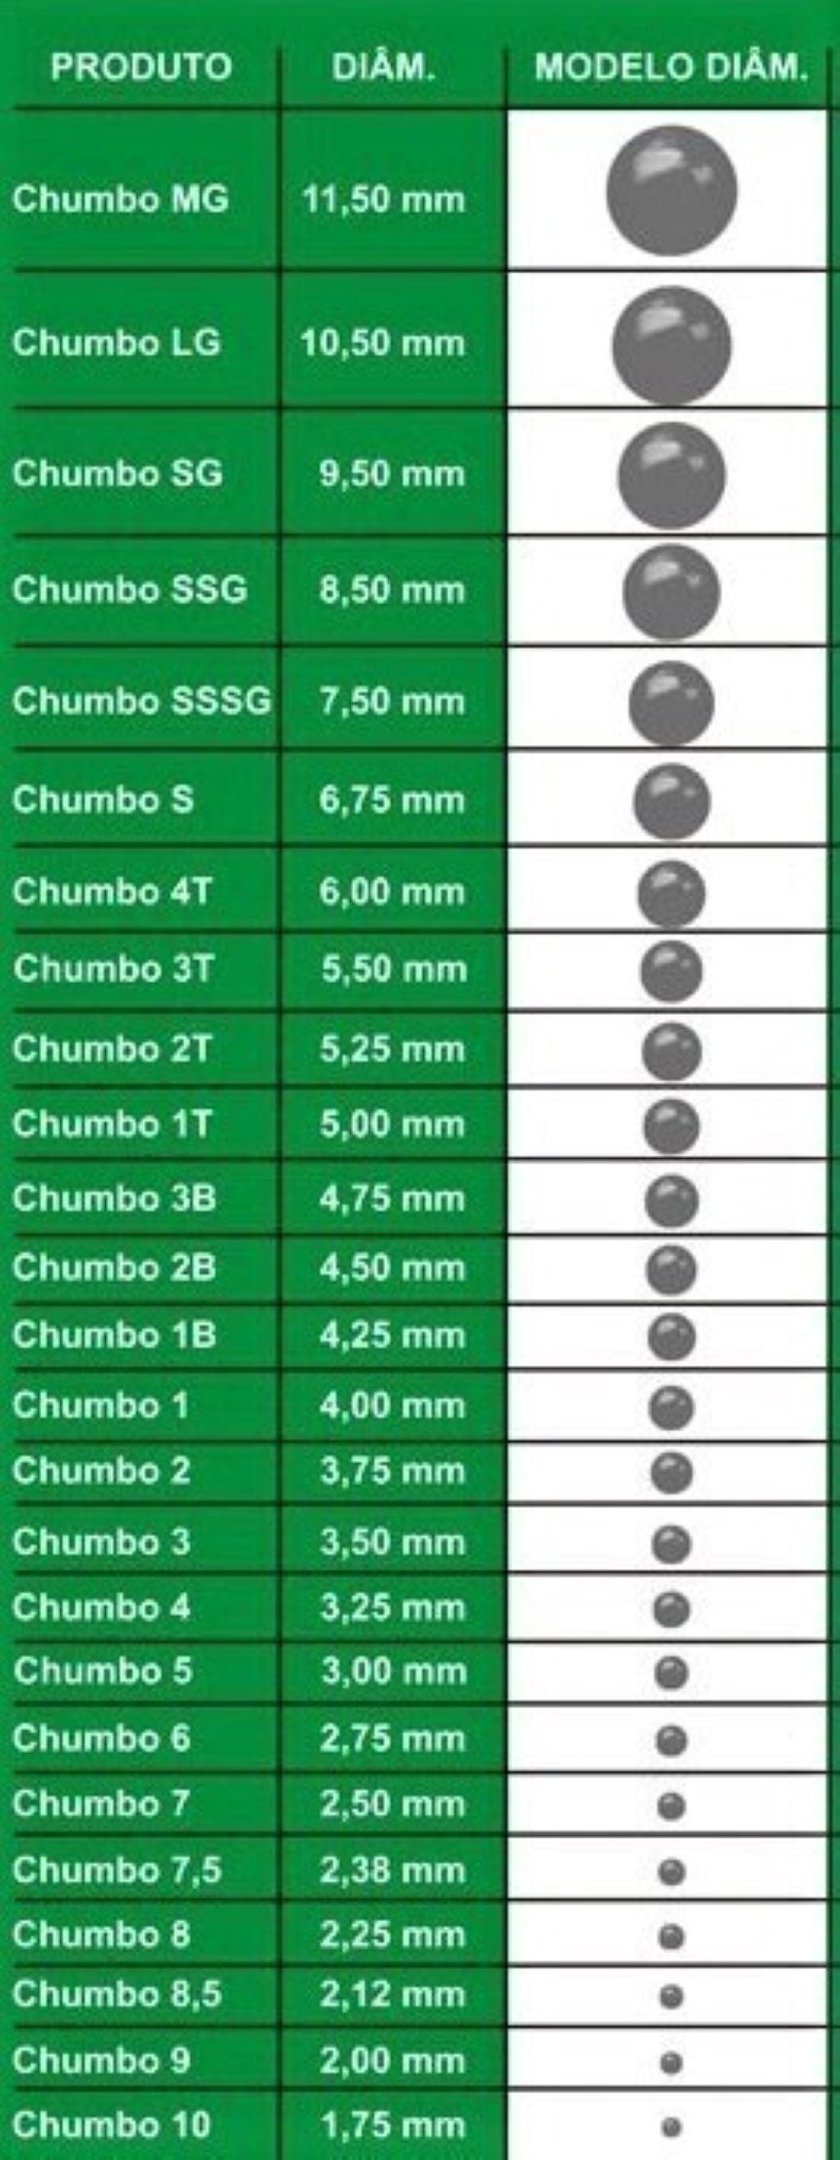 Chumbo granulado número 1B chumbo com diâmetro de 4,25 mm - 5